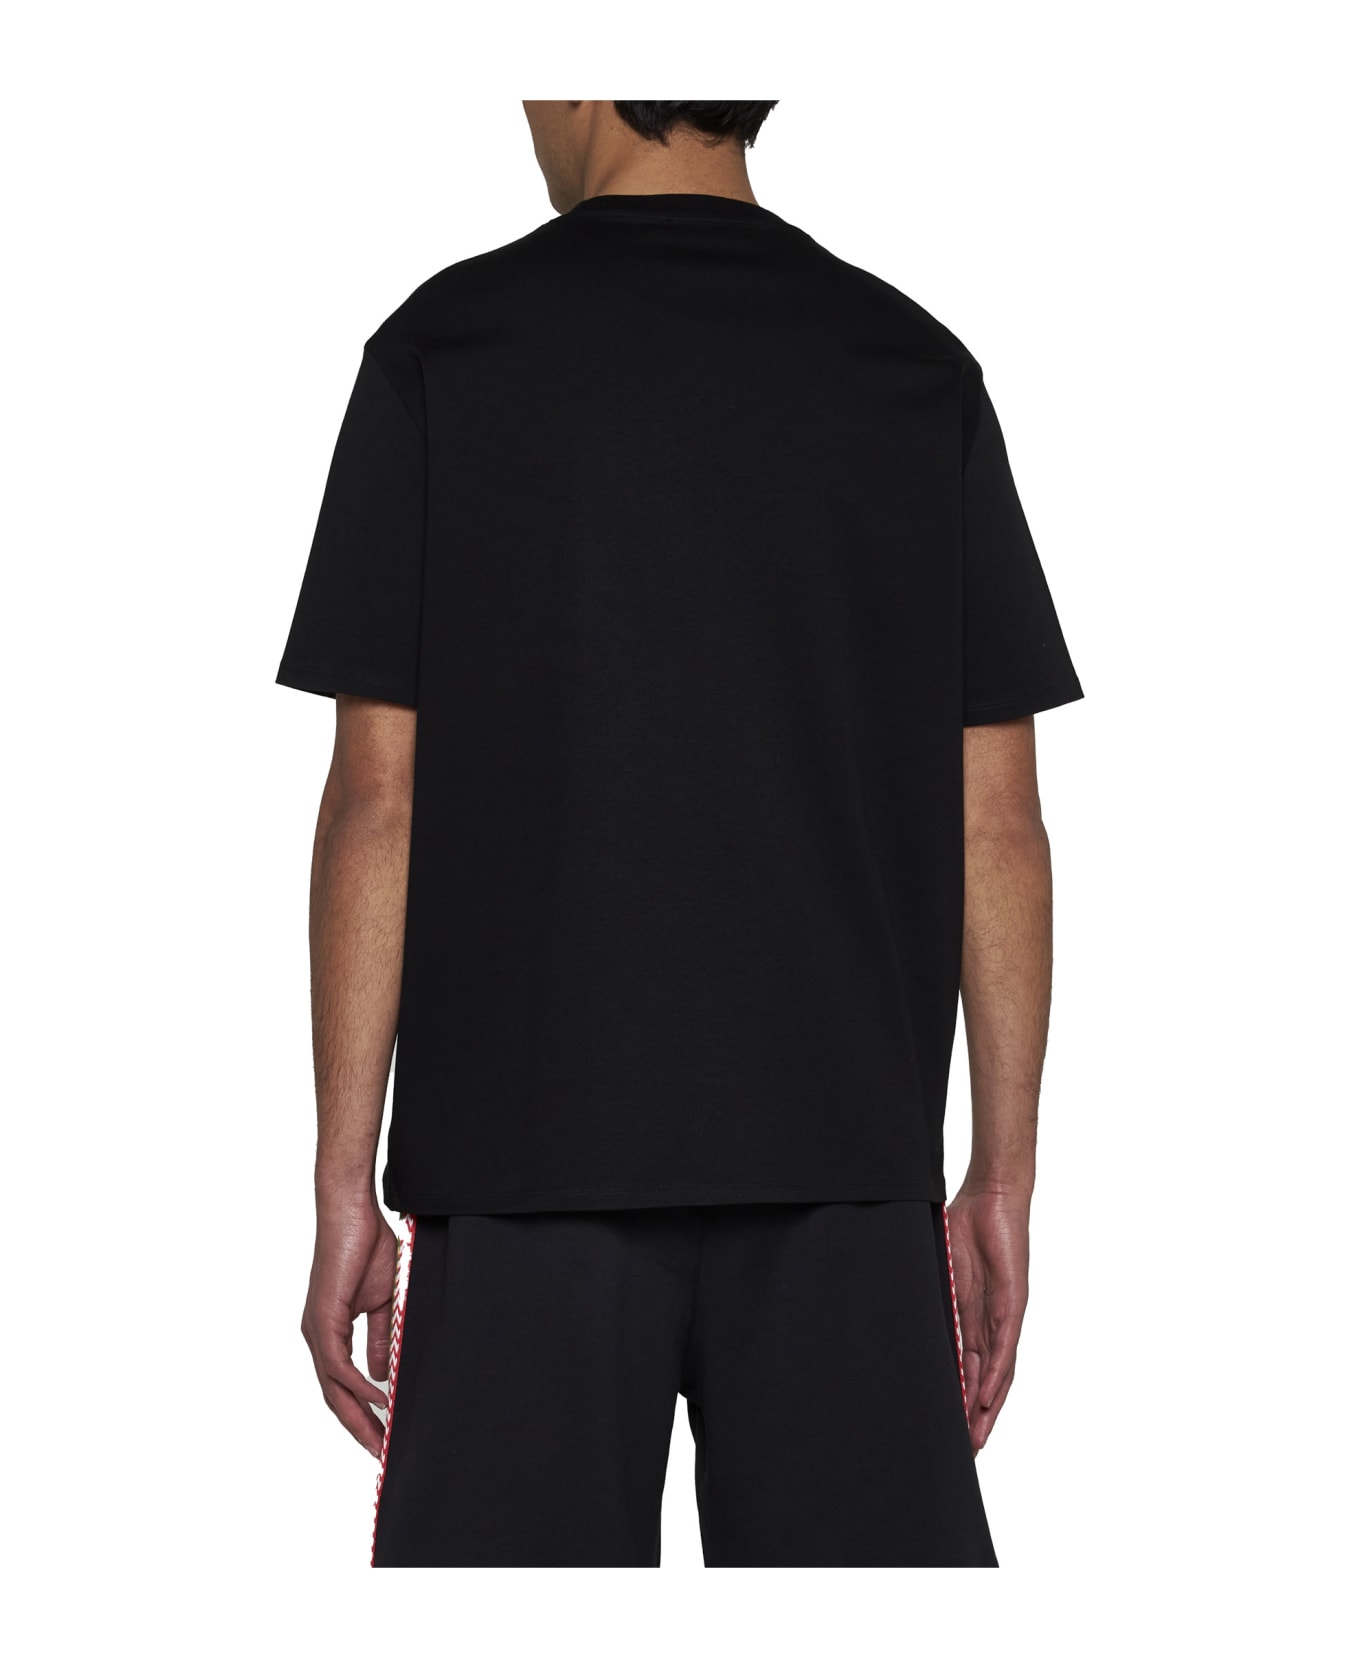 Lanvin T-Shirt - Black